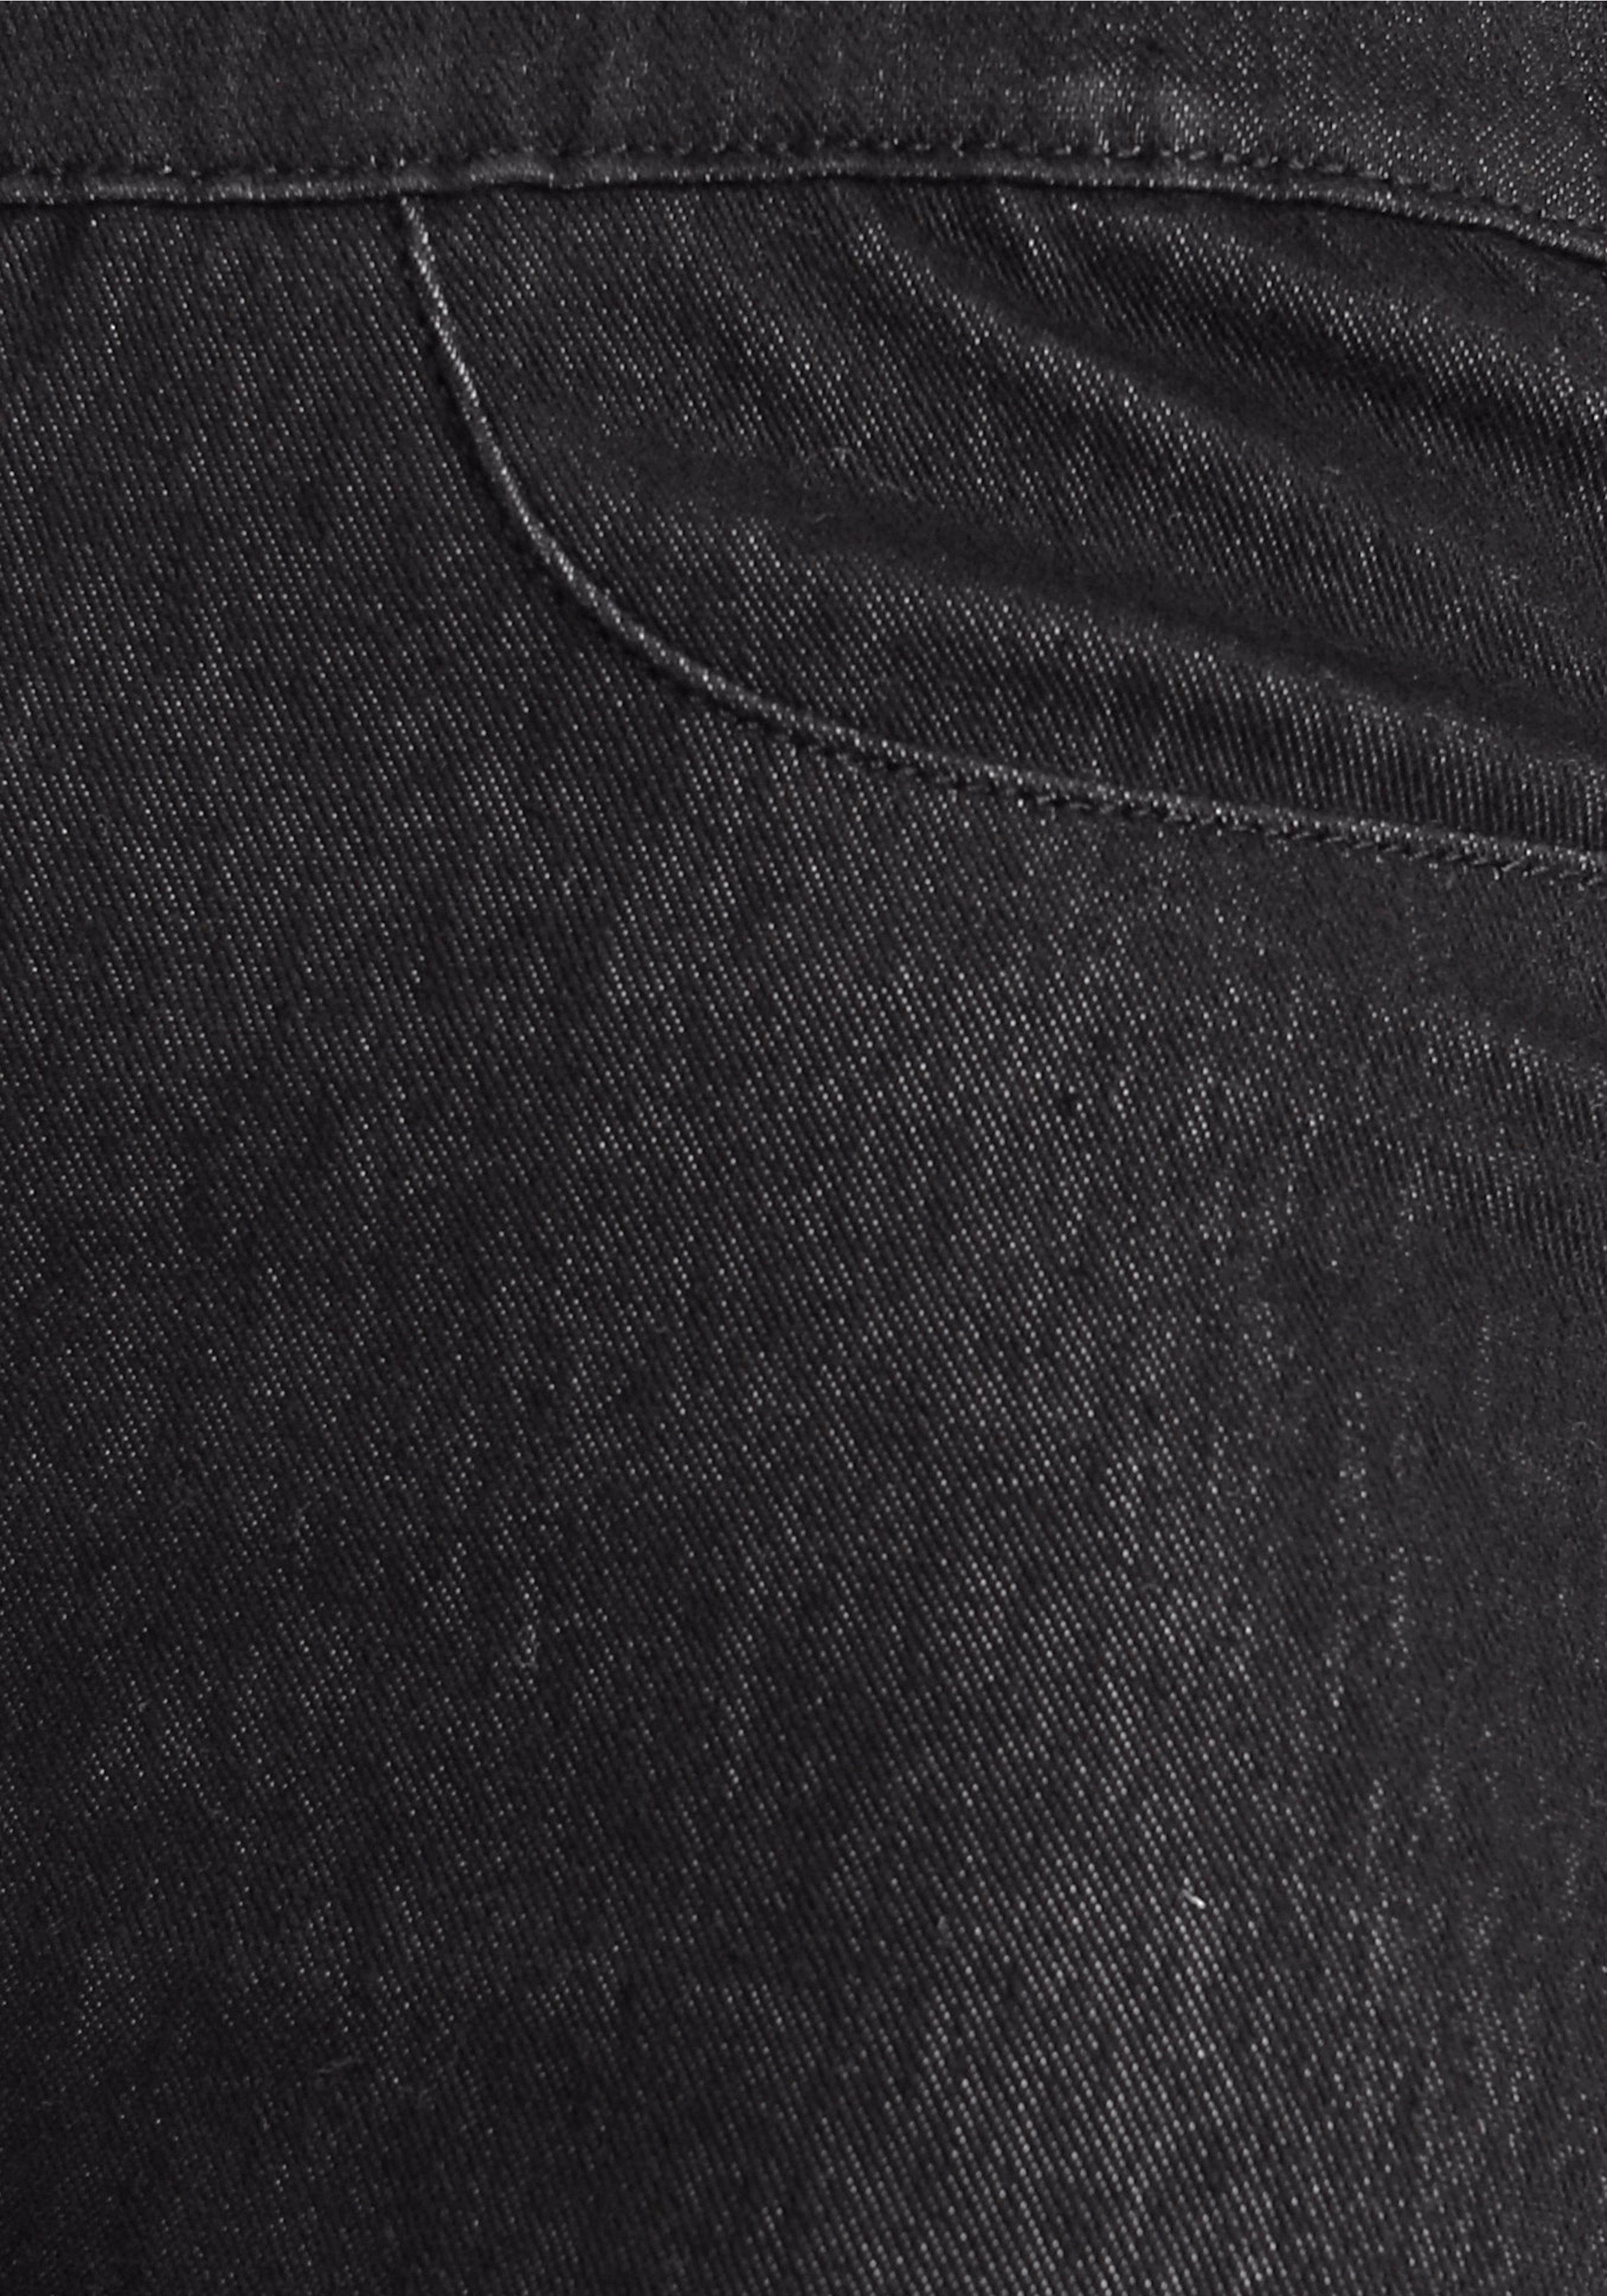 black Jogg Denim-Optik in Waist High Pants Arizona